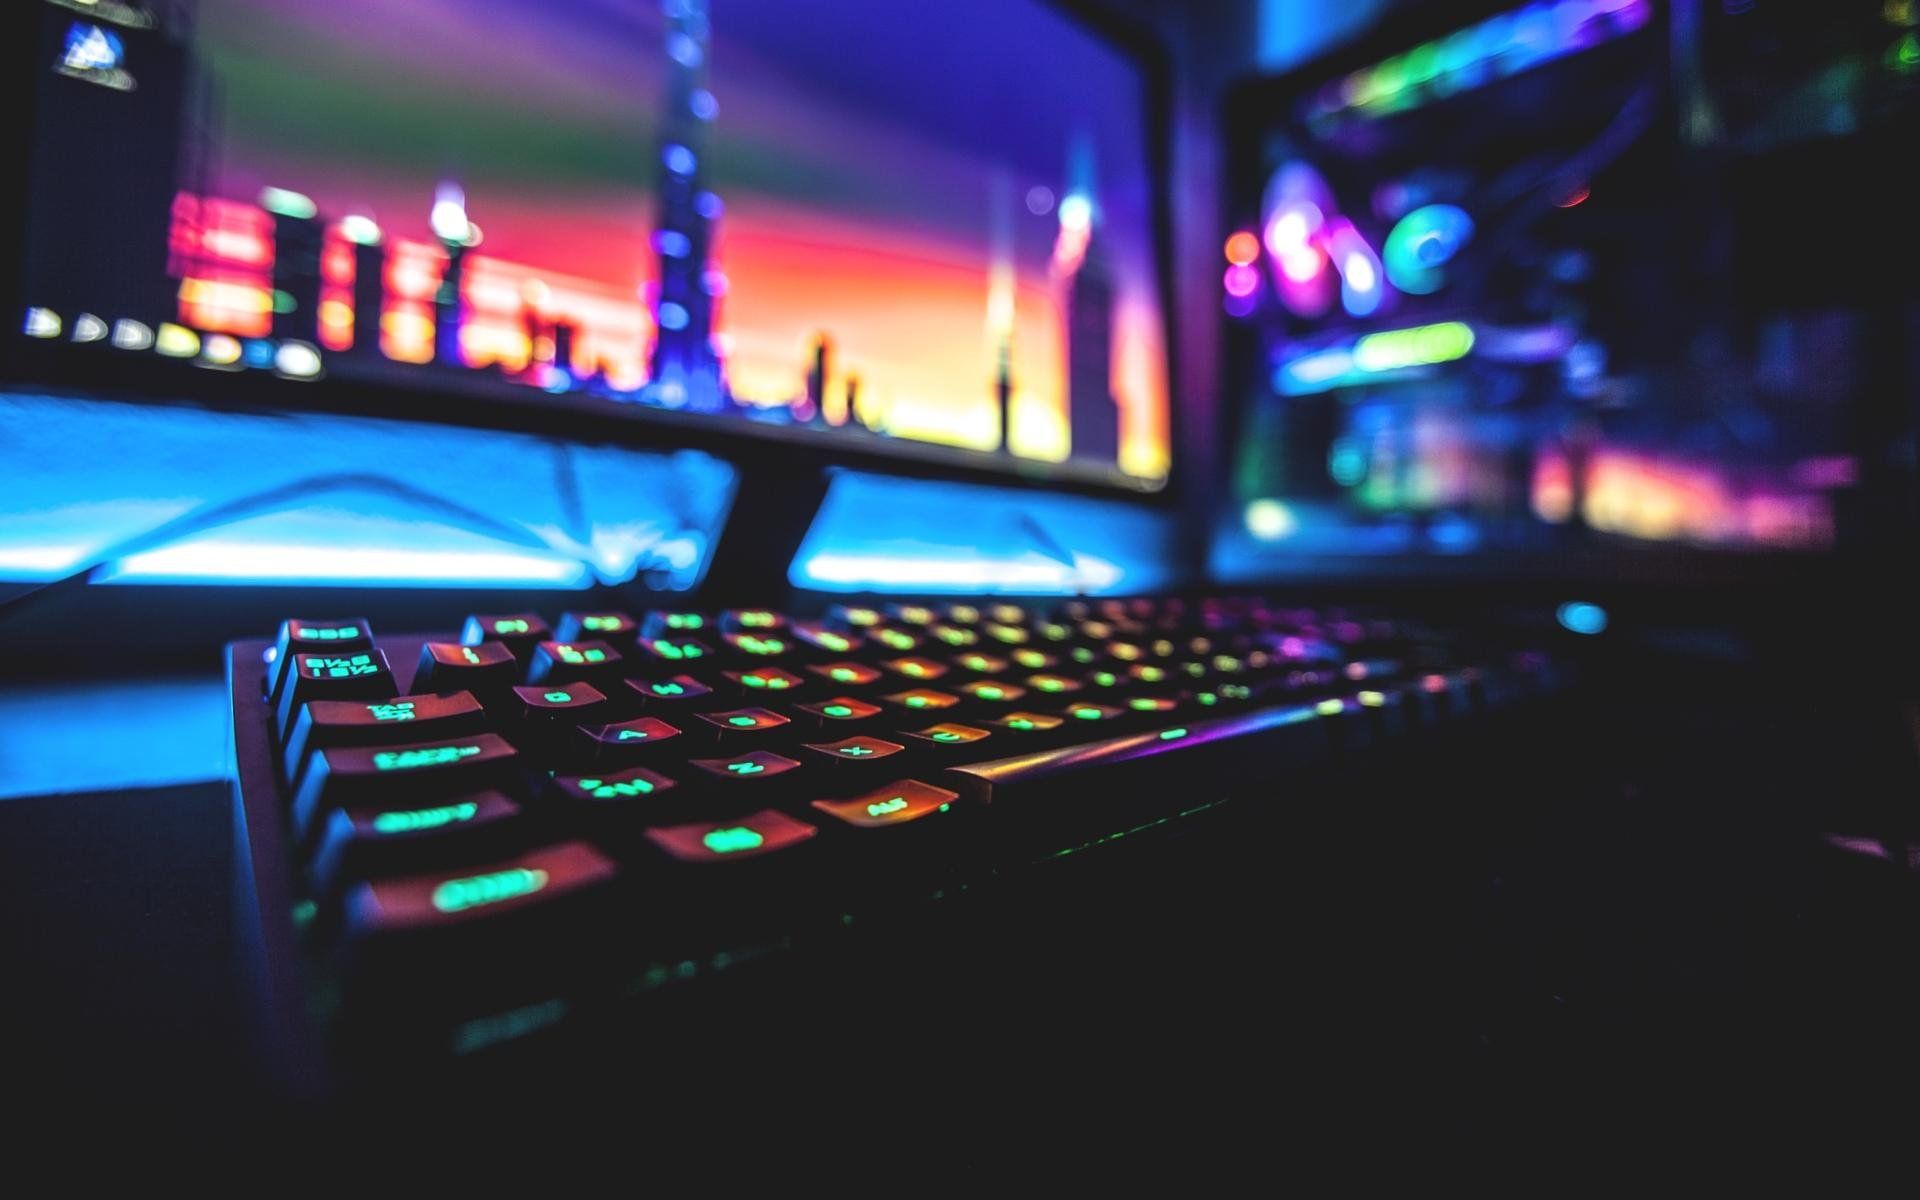 Rainbow Gaming Keyboard Wallpaper